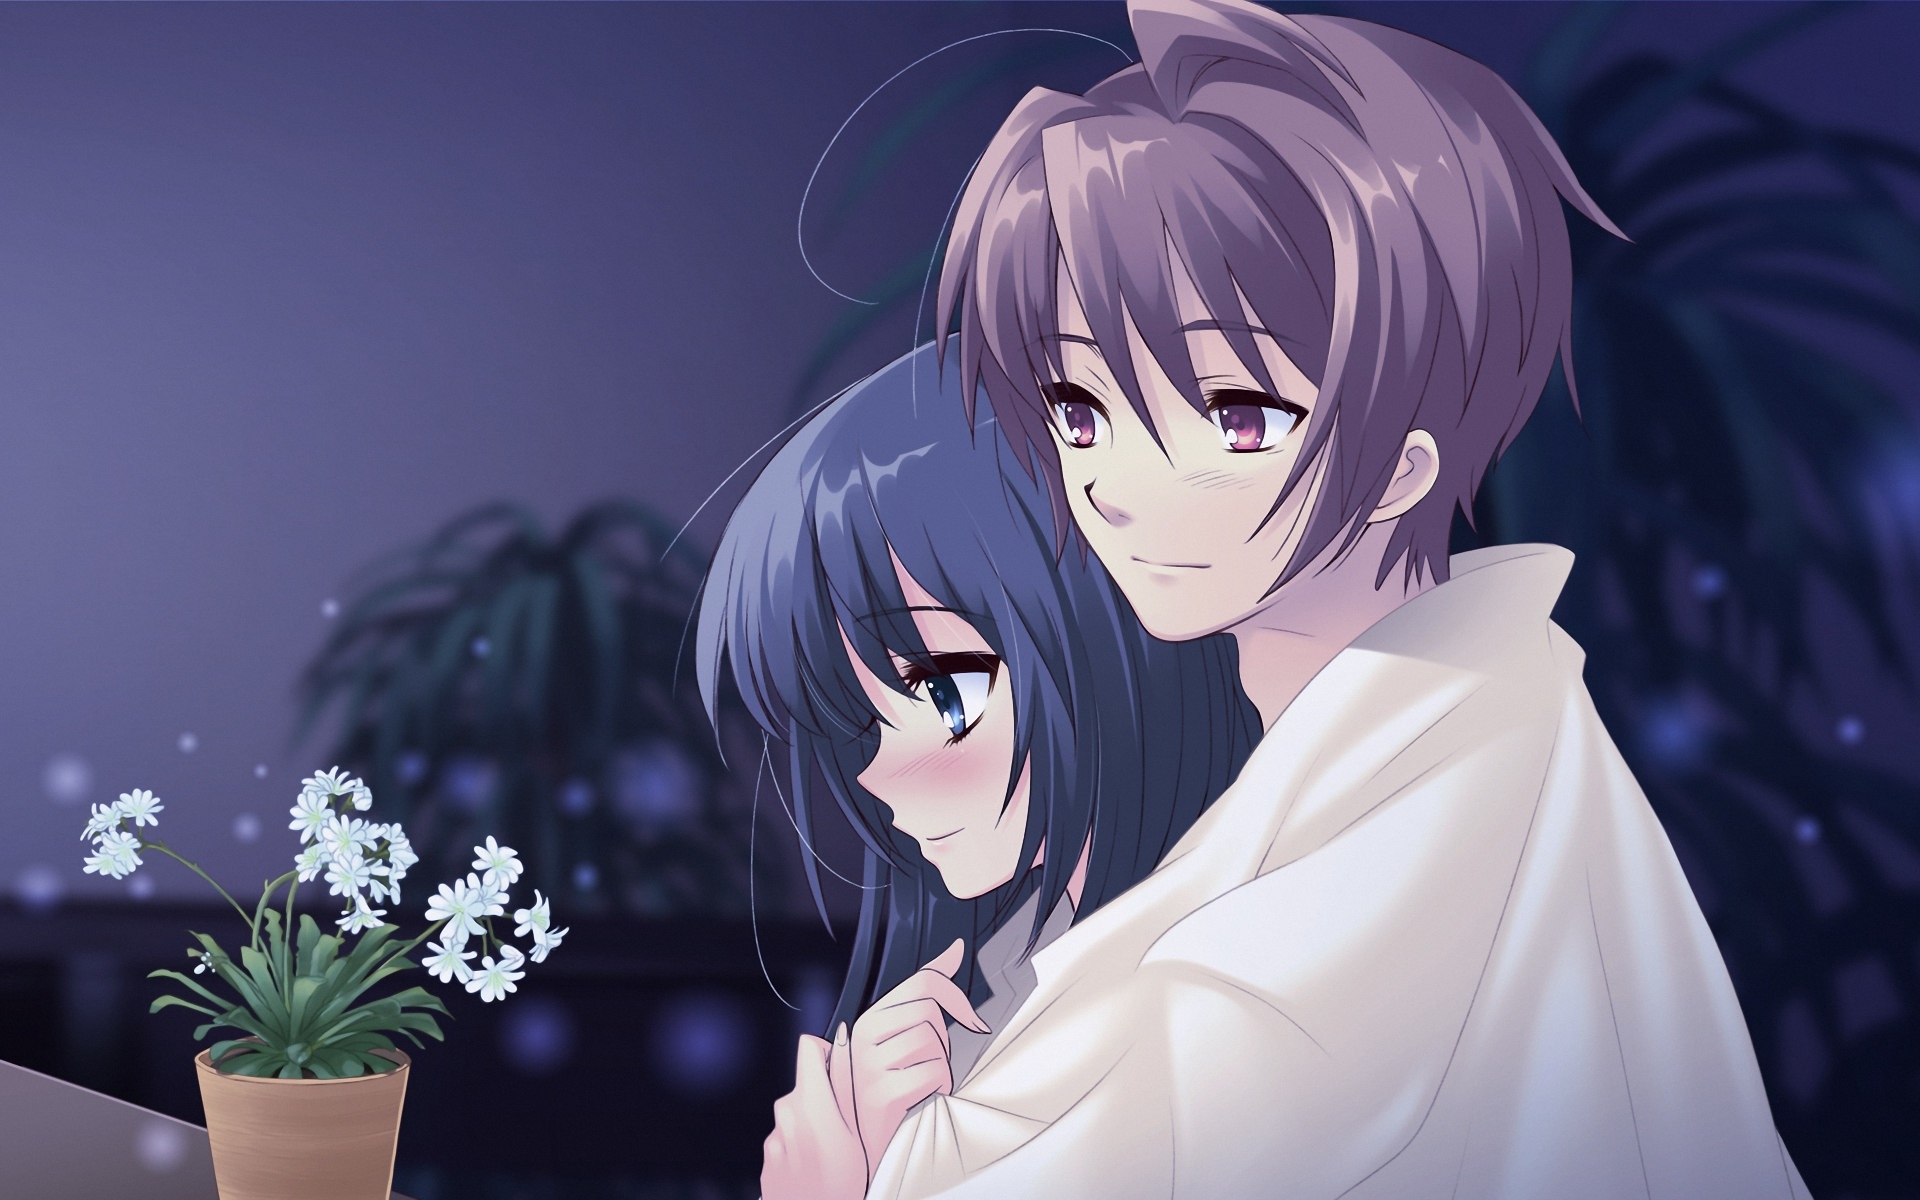 Random Anime GirlfriendBoyfriend Scenarios Modern Au  Your Guys Fave  CuddlingSleeping Position Part 2  Wattpad